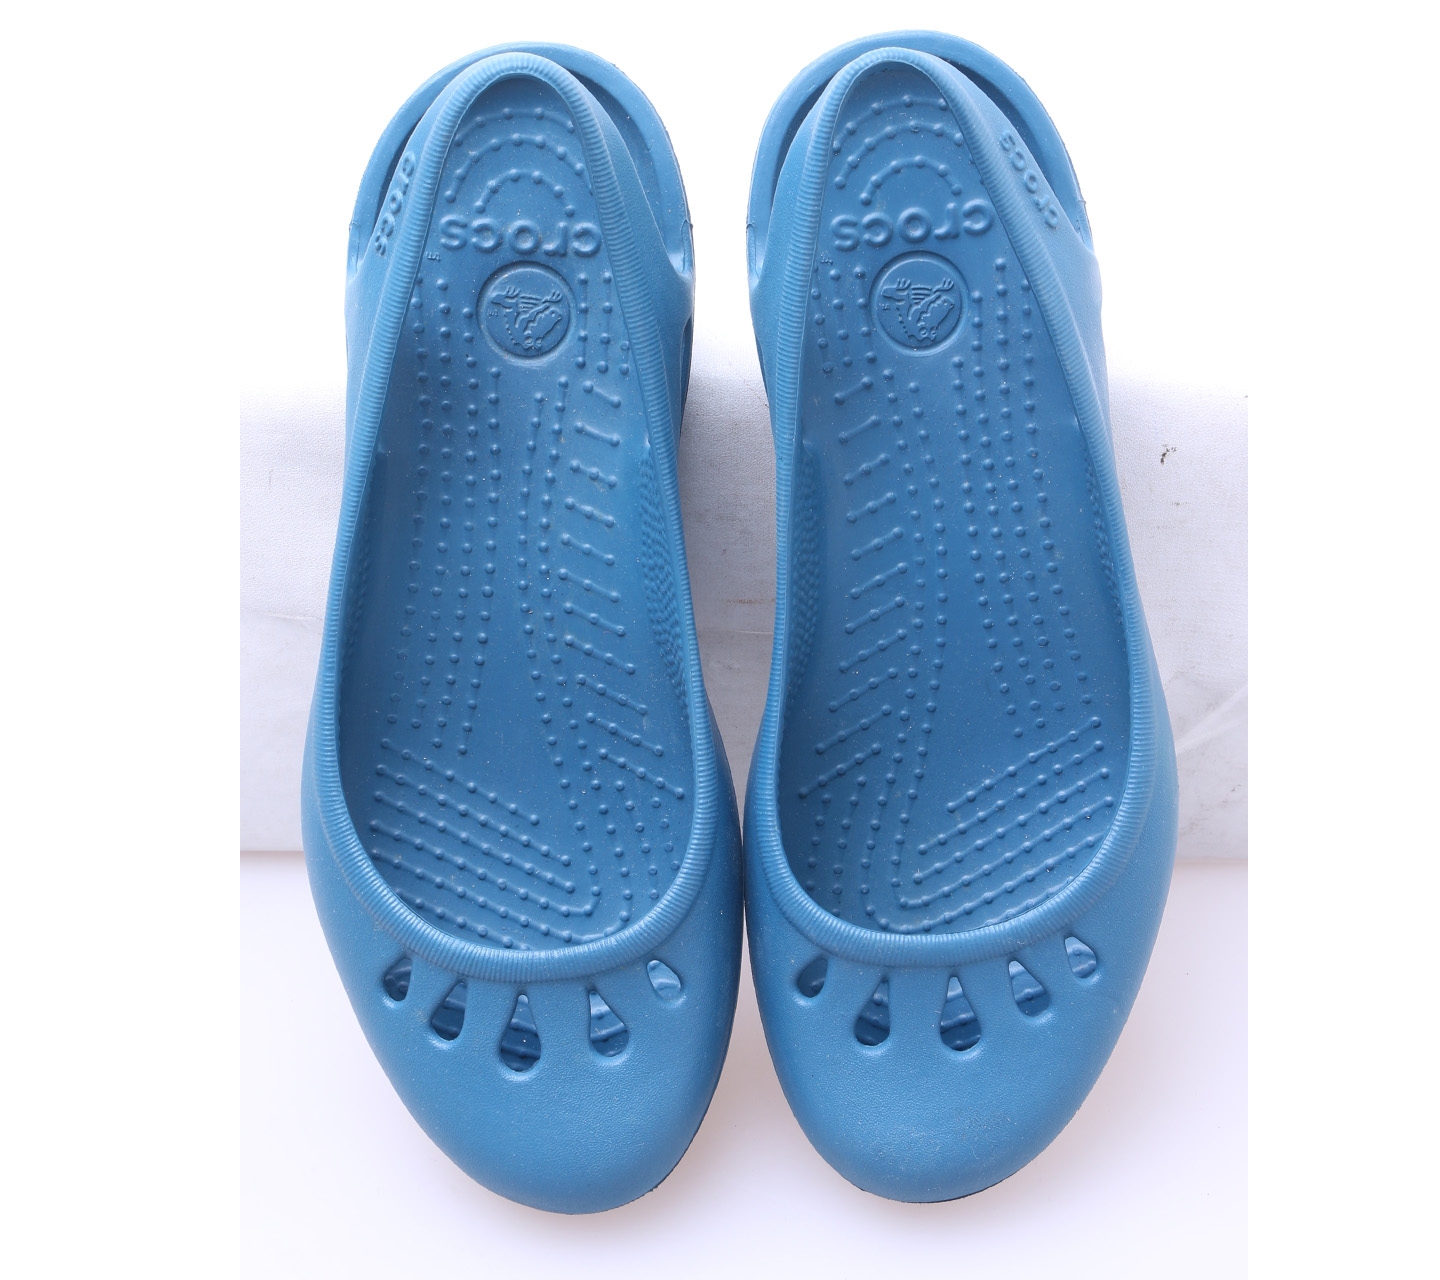 Crocs Dark Blue Sandals